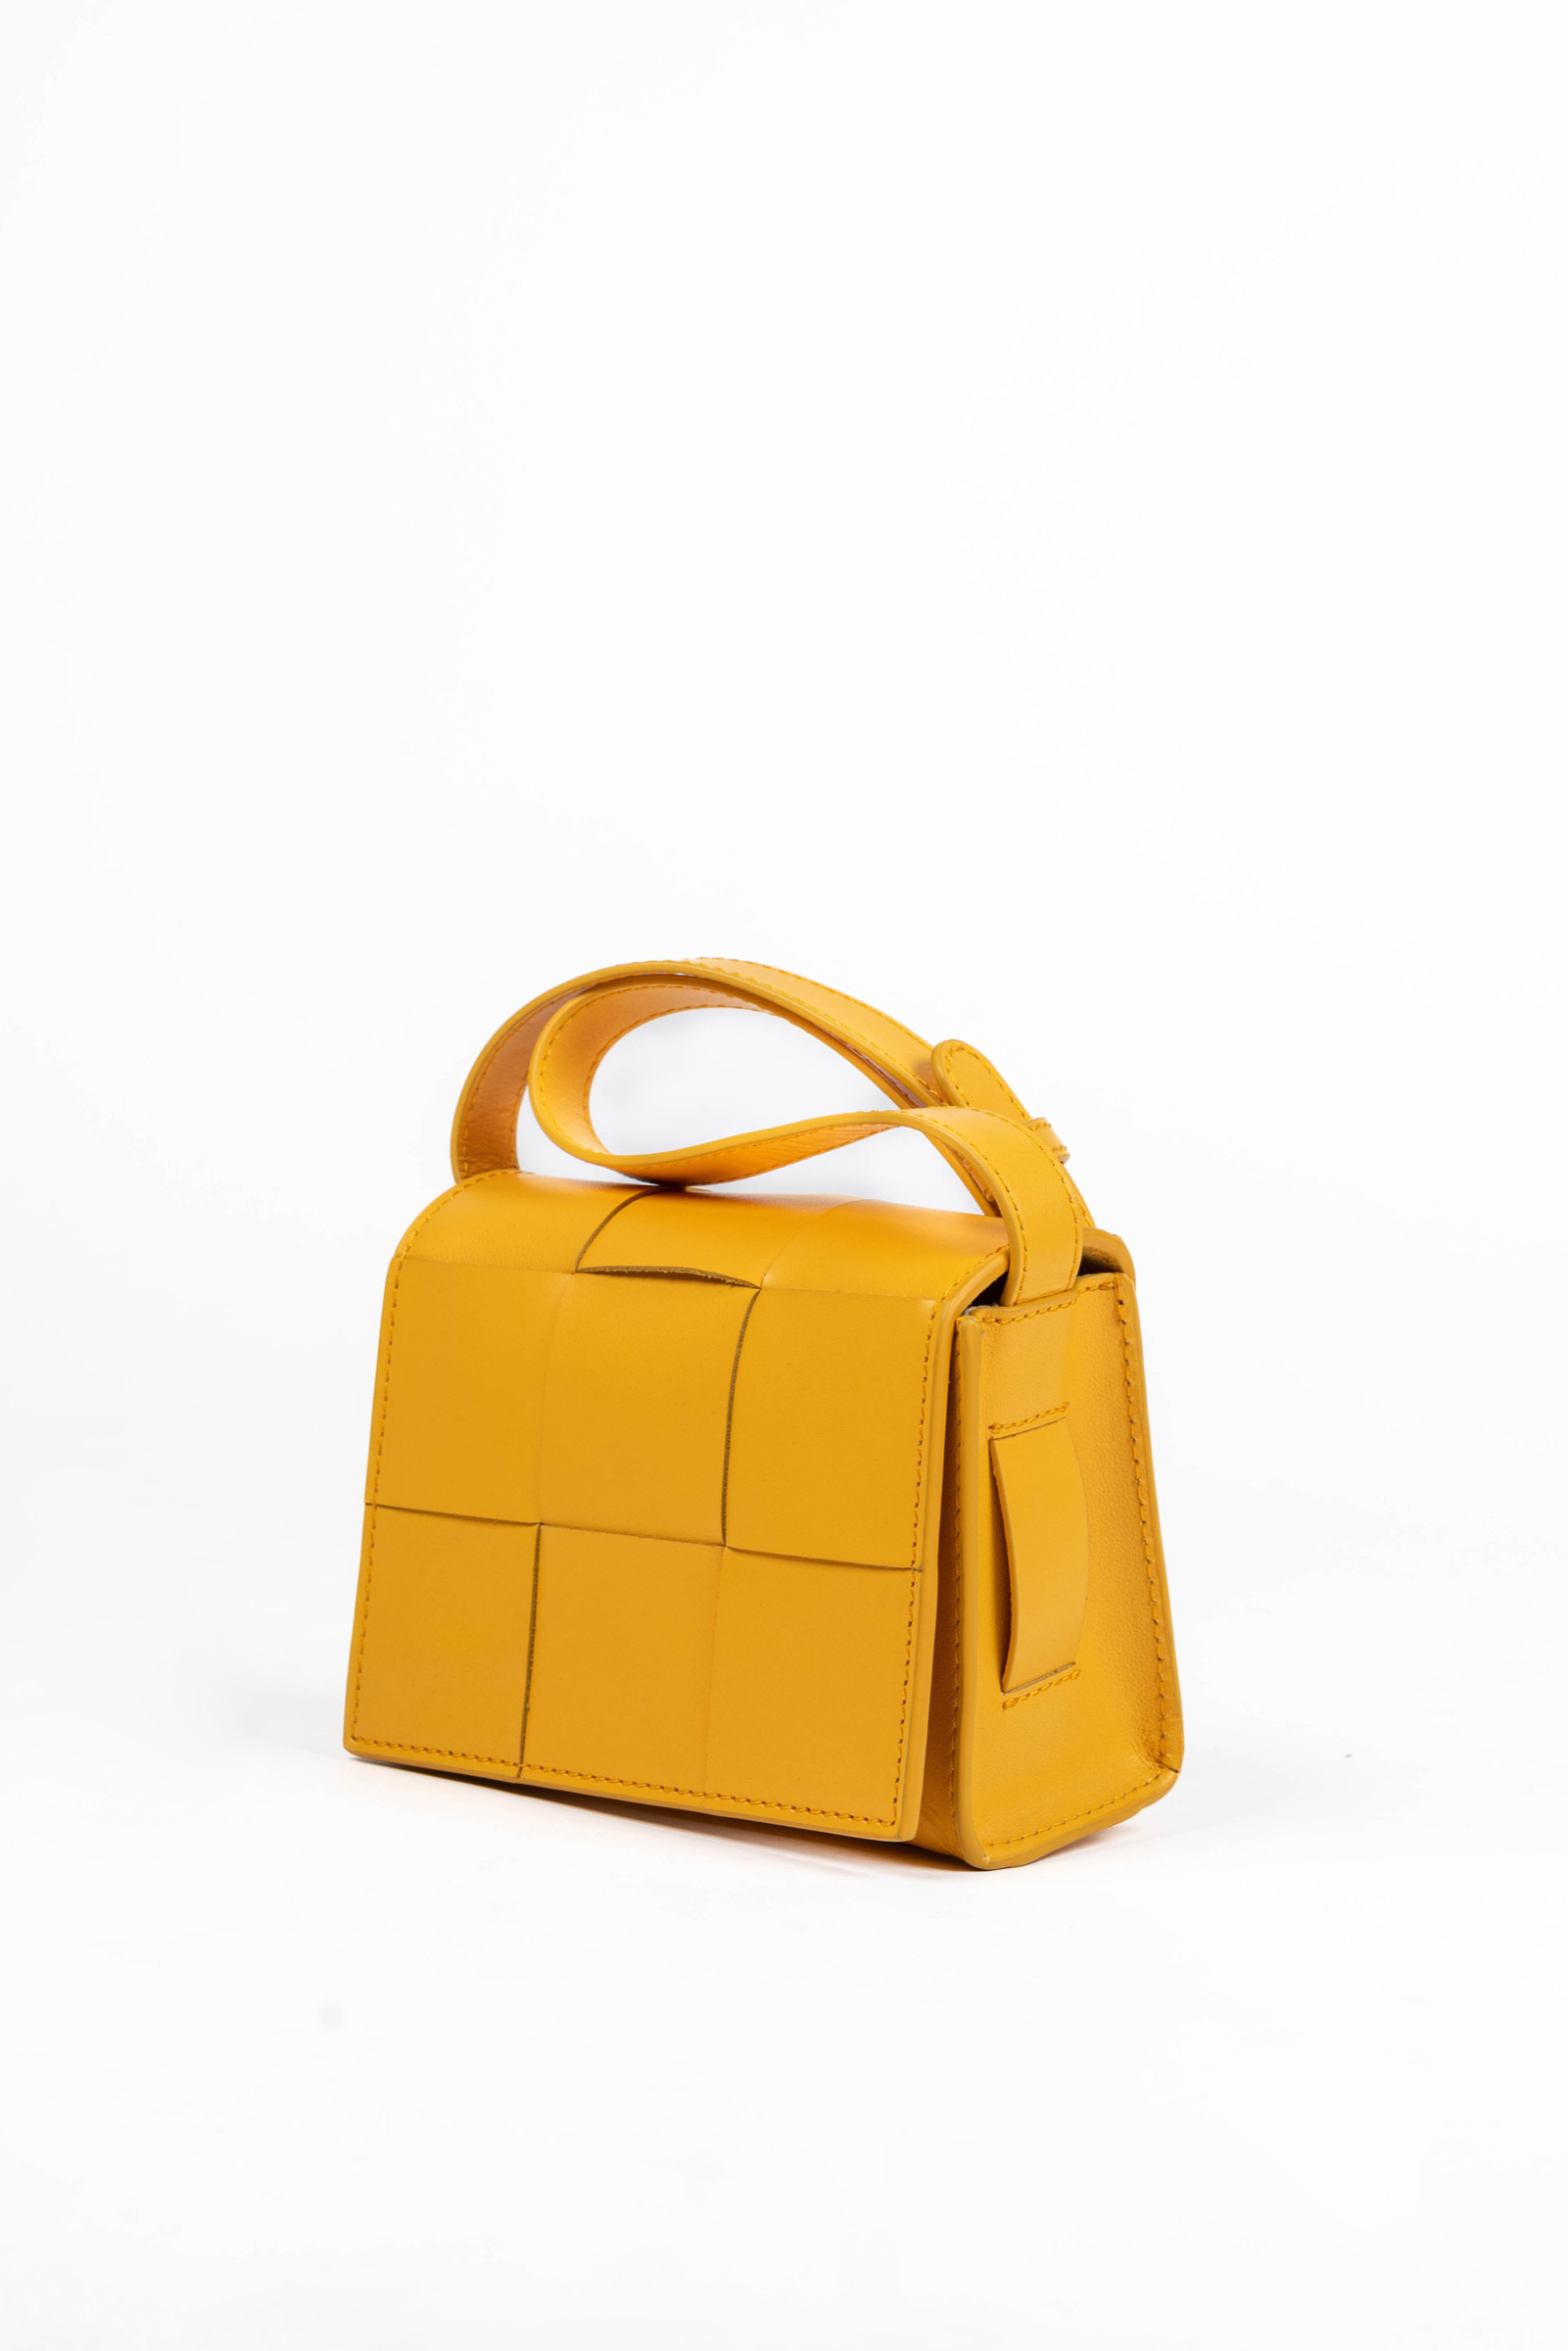 Mini Match Box Bag - Pineapple